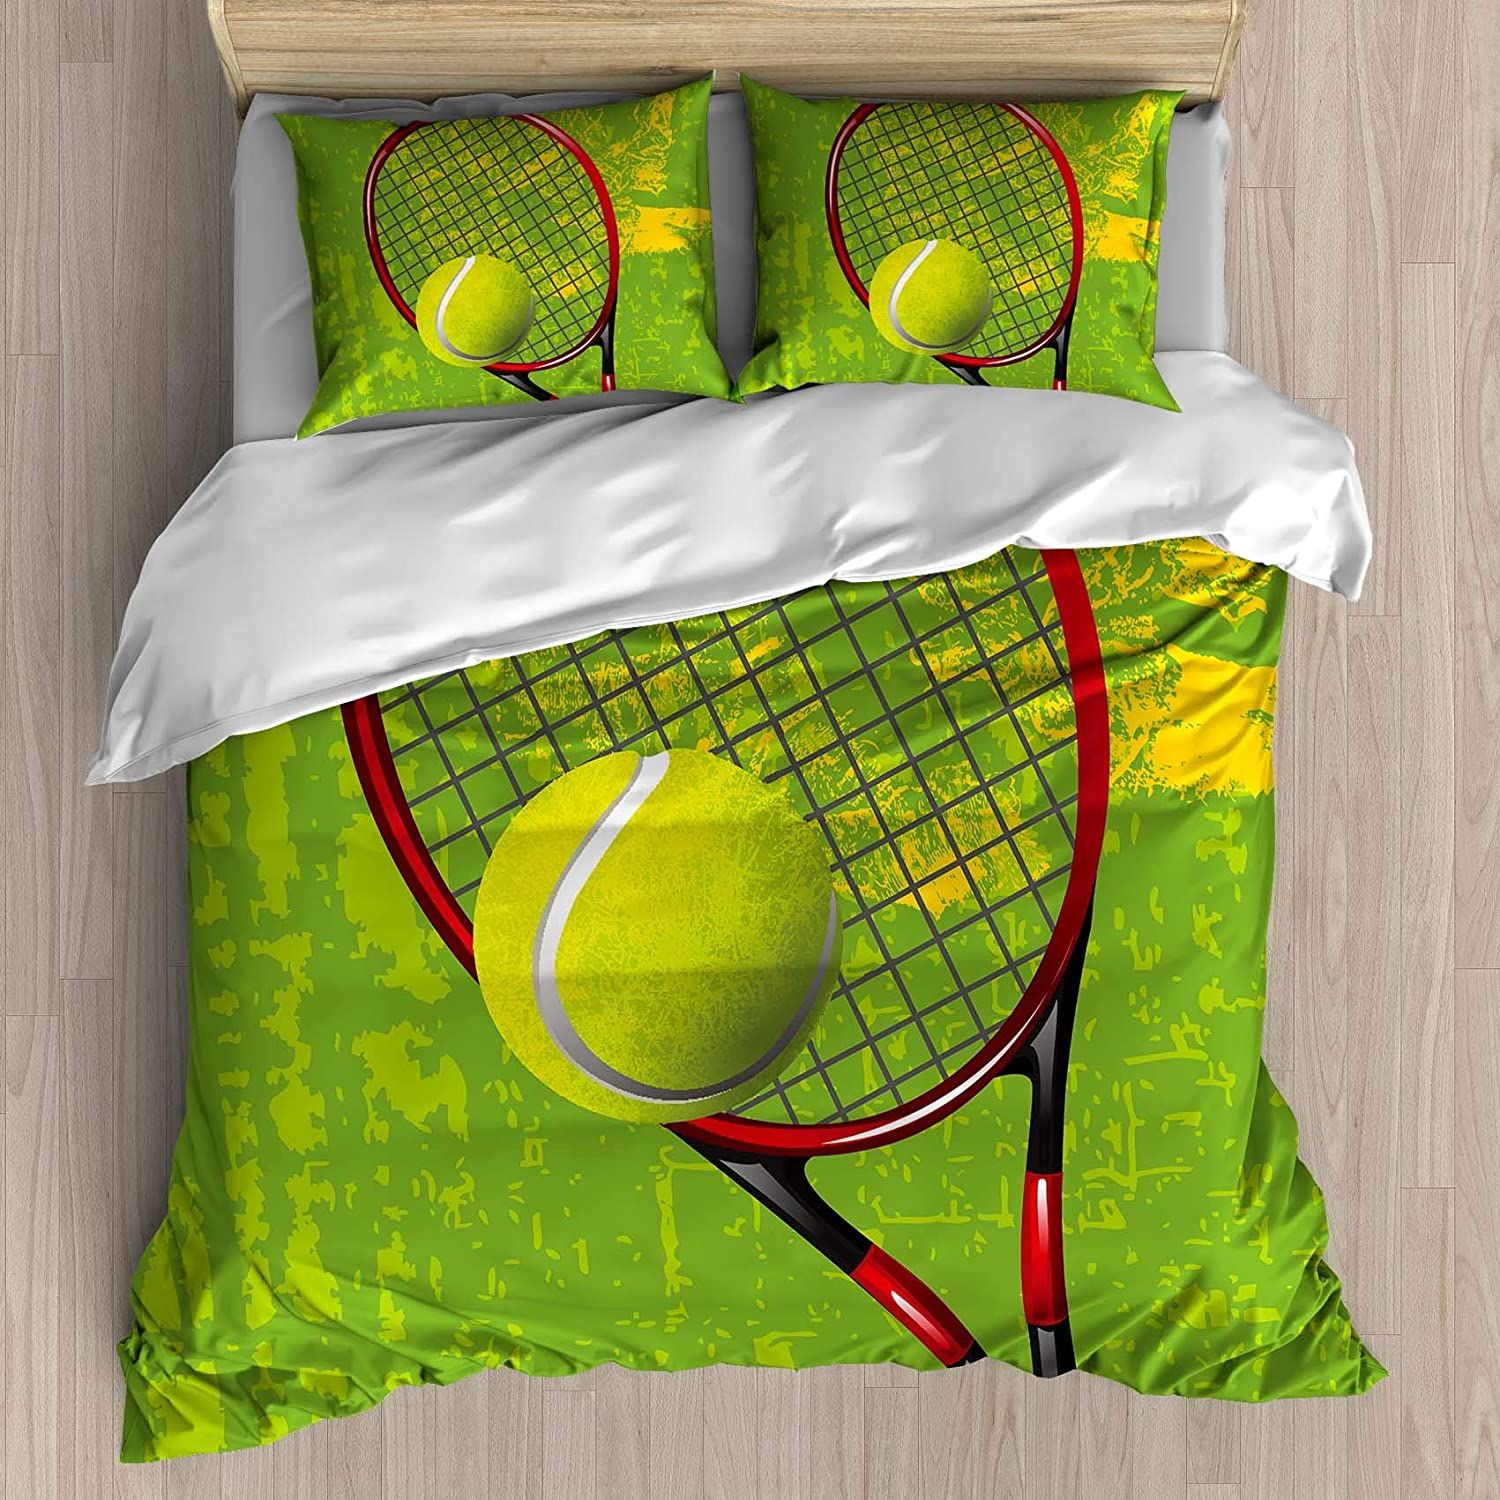 Beautiful Tennis Bedding Set